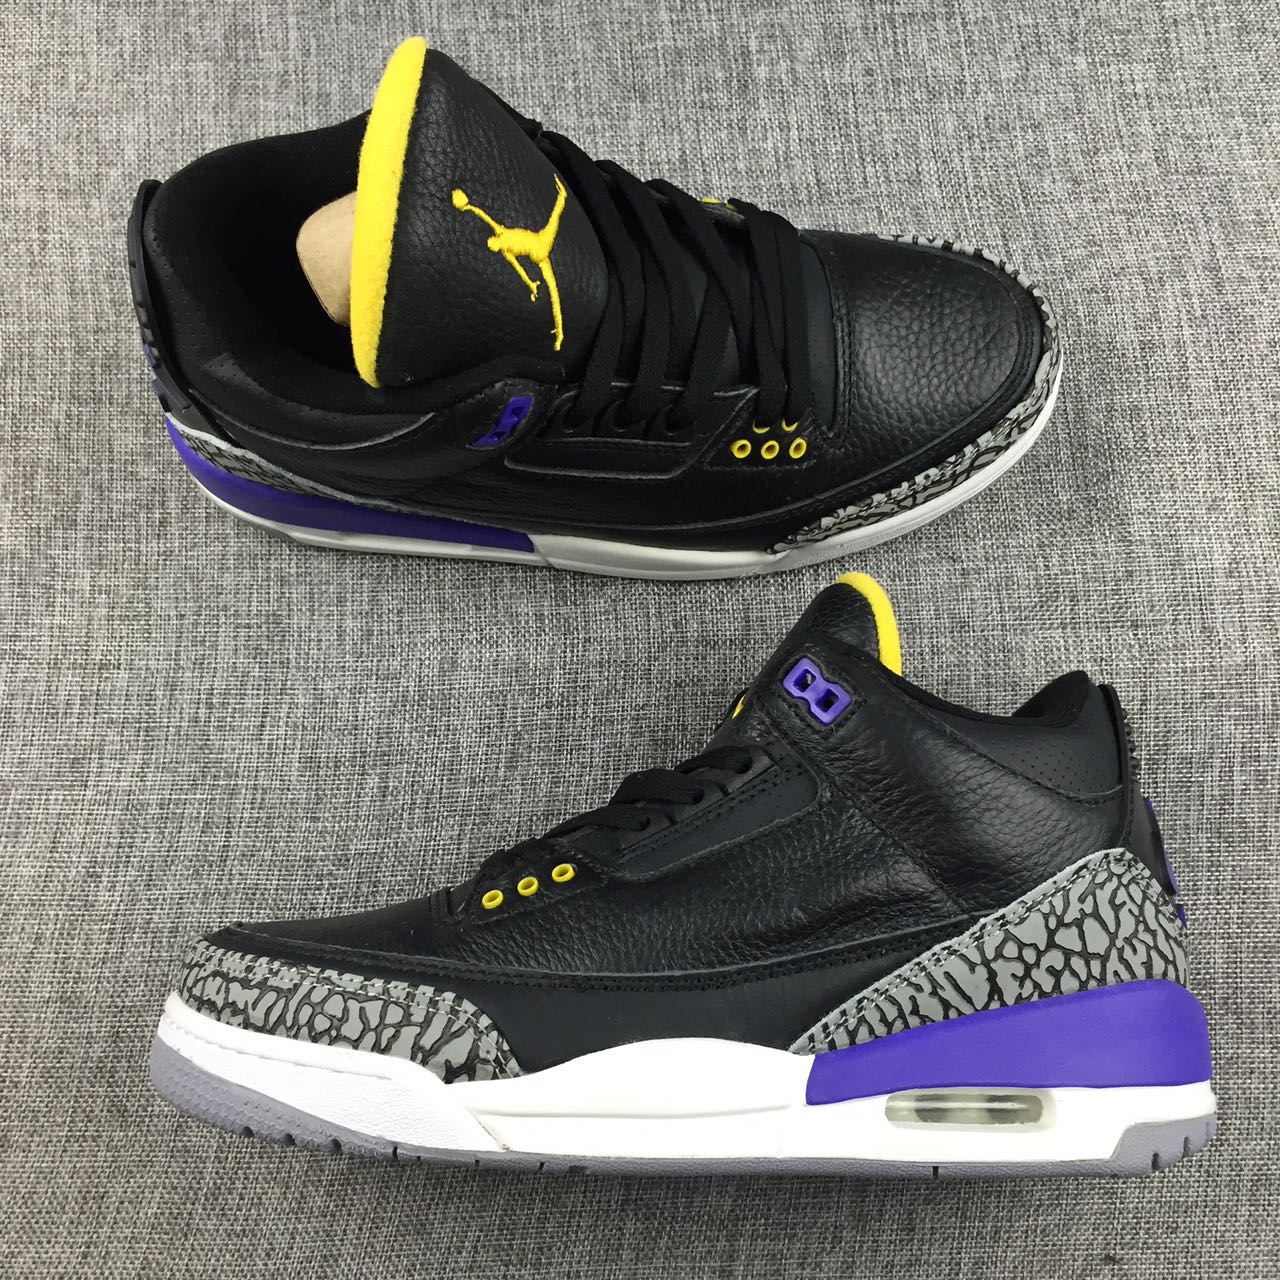 New Air Jordan 3 Black Purple Yellow Shoes - Click Image to Close